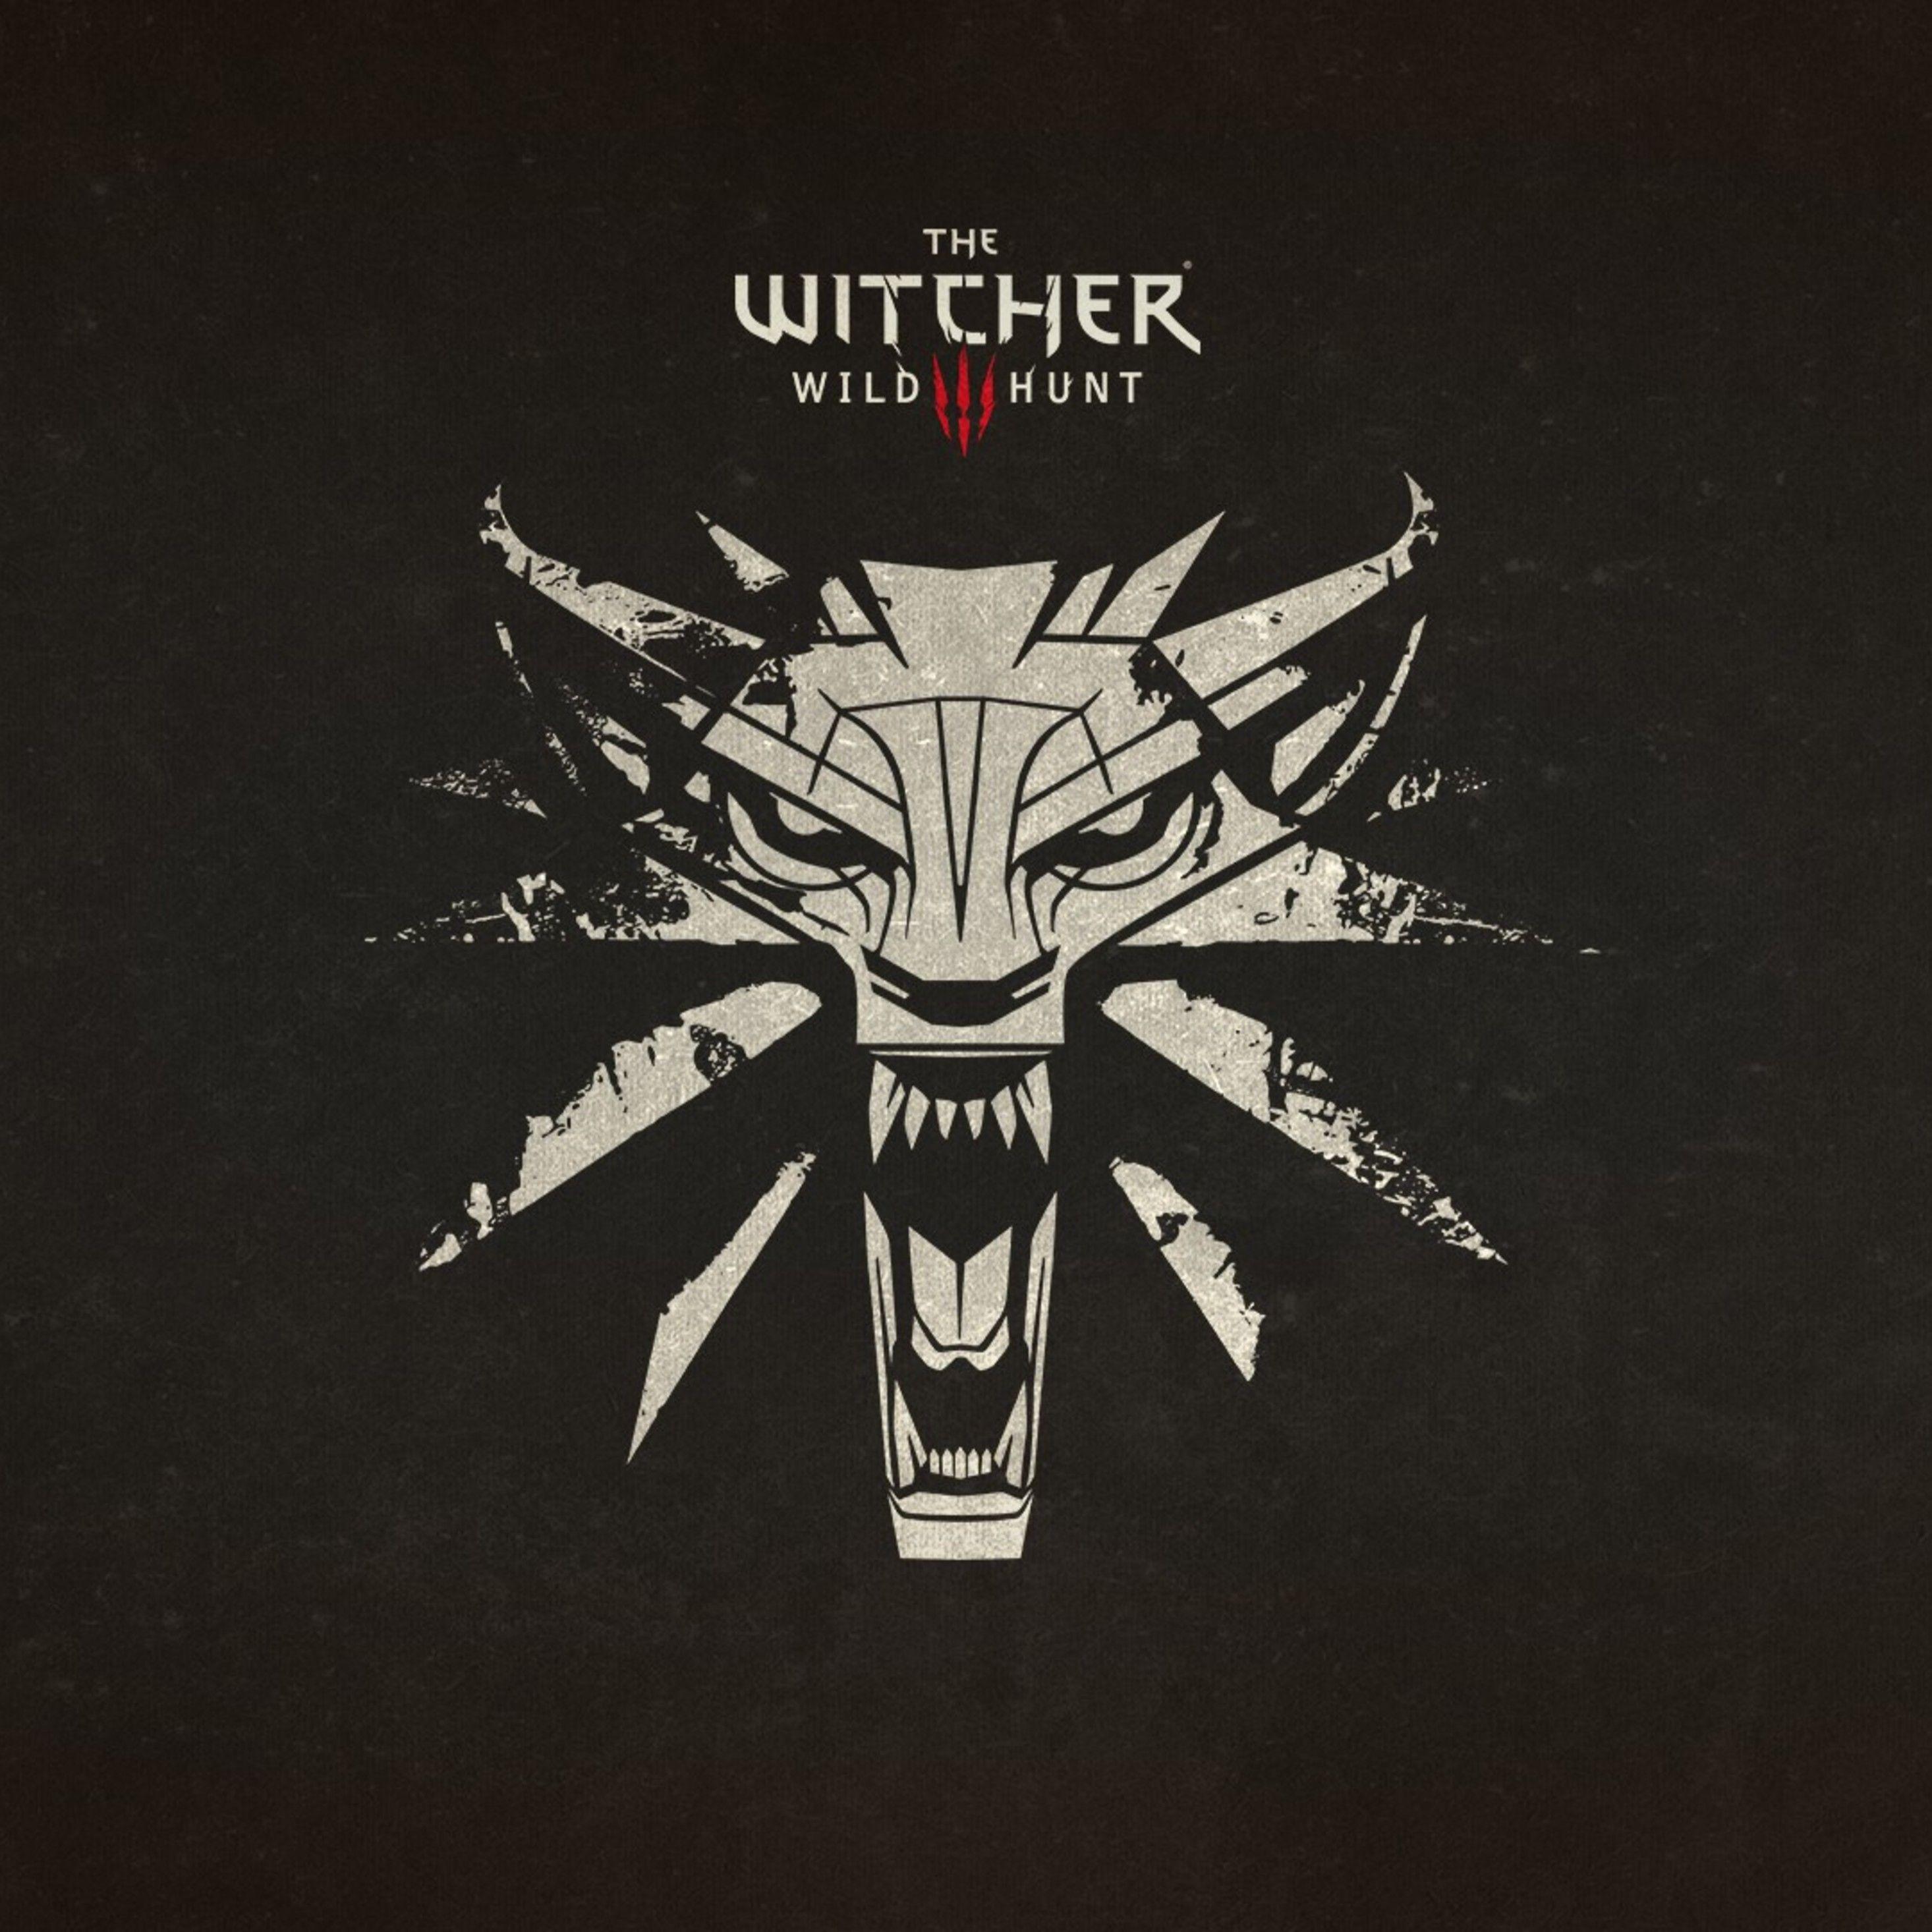 Witcher Logo - The Witcher 3 Wild Hunt Logo iPad Pro Retina Display HD 4k